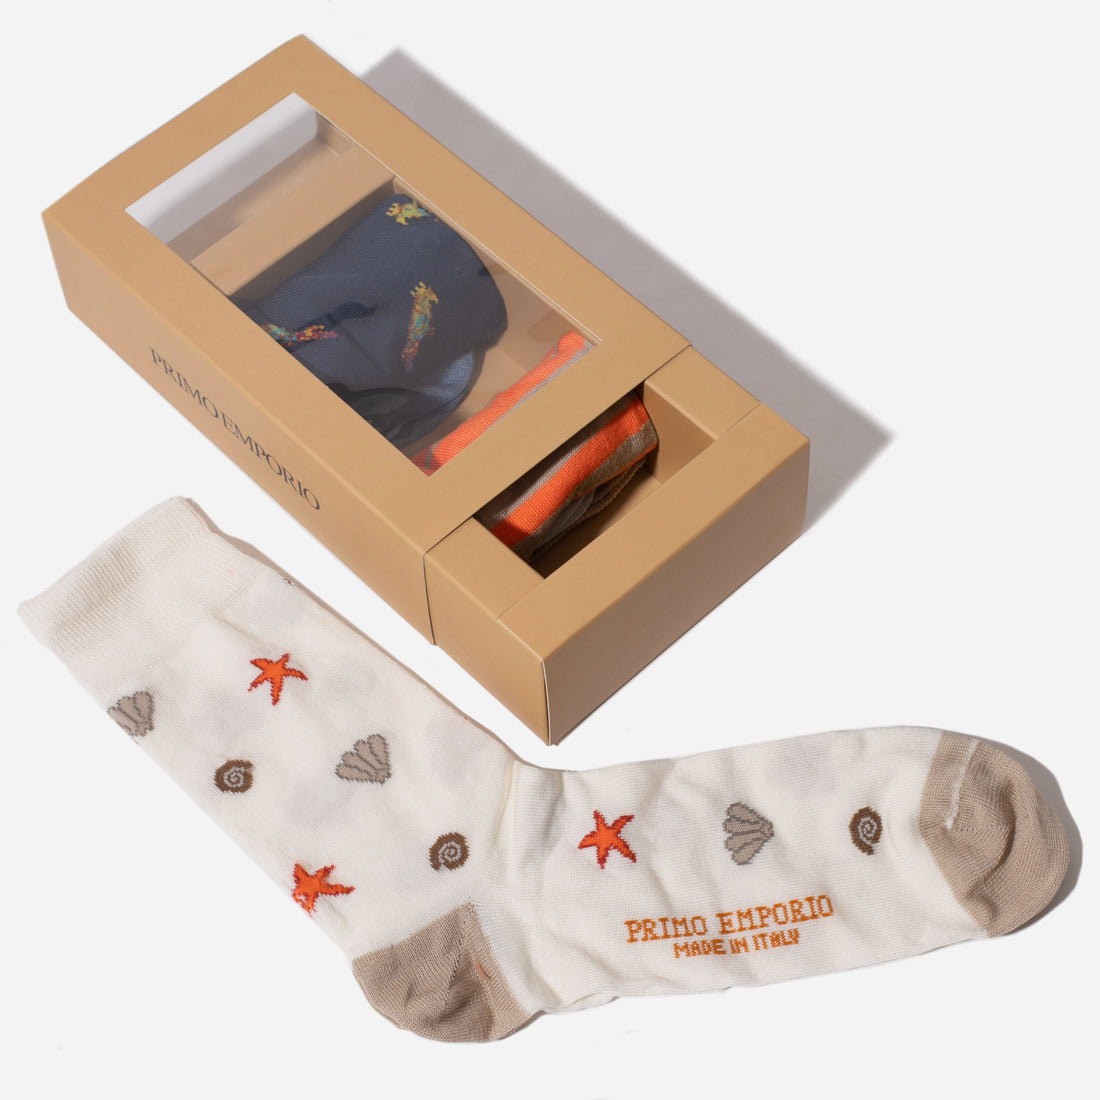 Three-piece socks package in box